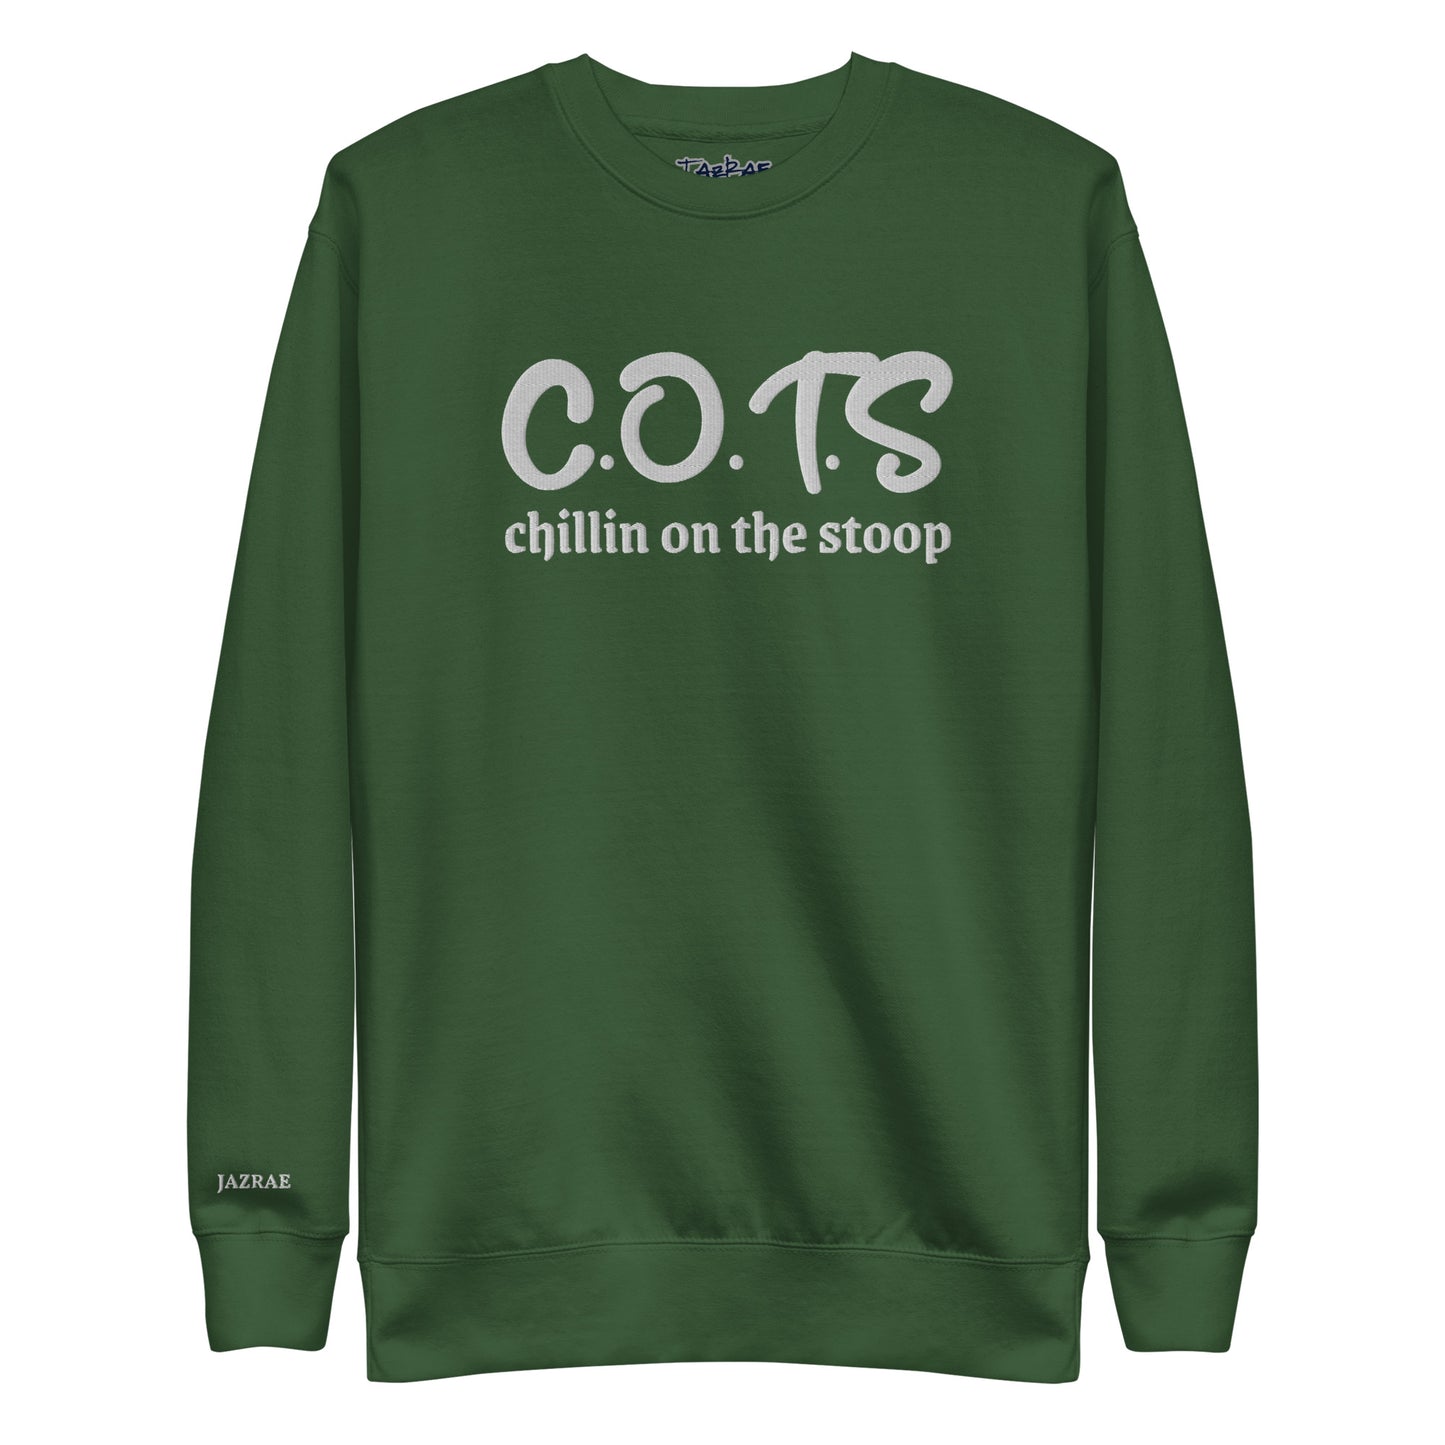 C.O.T.S CHILLIN ON THE STOOP Stitched  Unisex Premium Sweatshirt